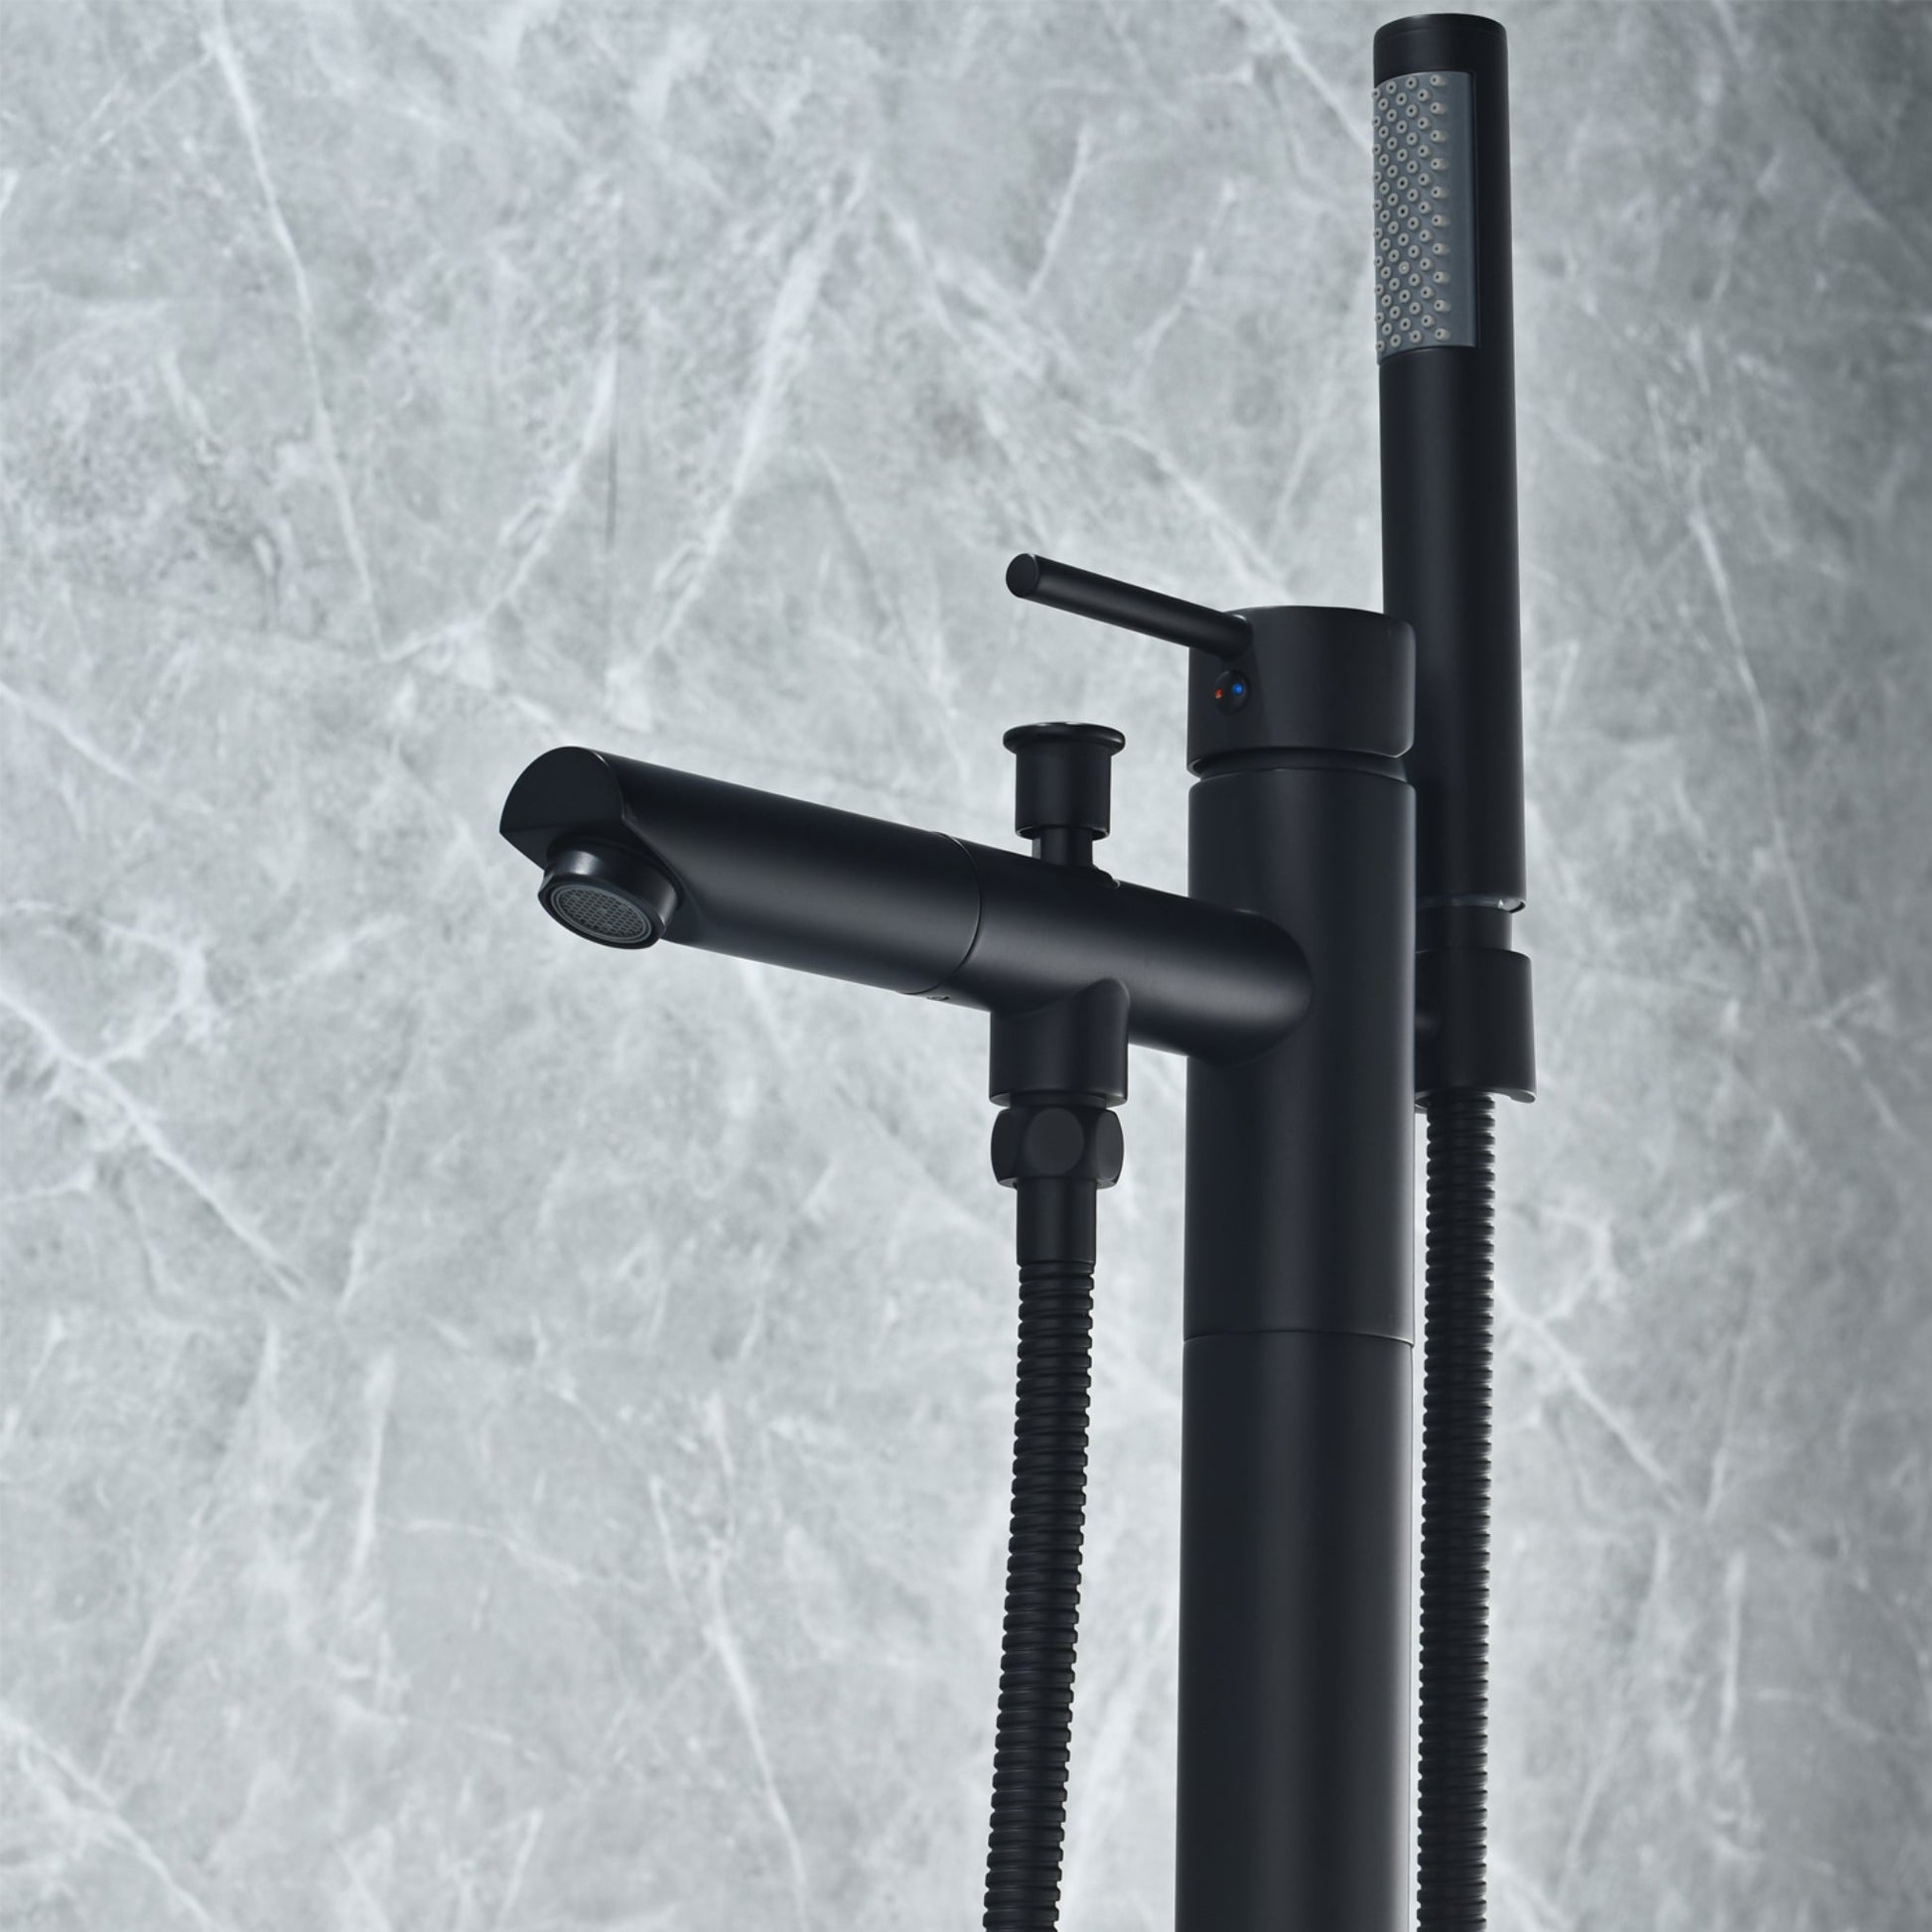 Altair Larod Matte Black Single Lever Handle Freestanding Bathtub Faucet With Handshower